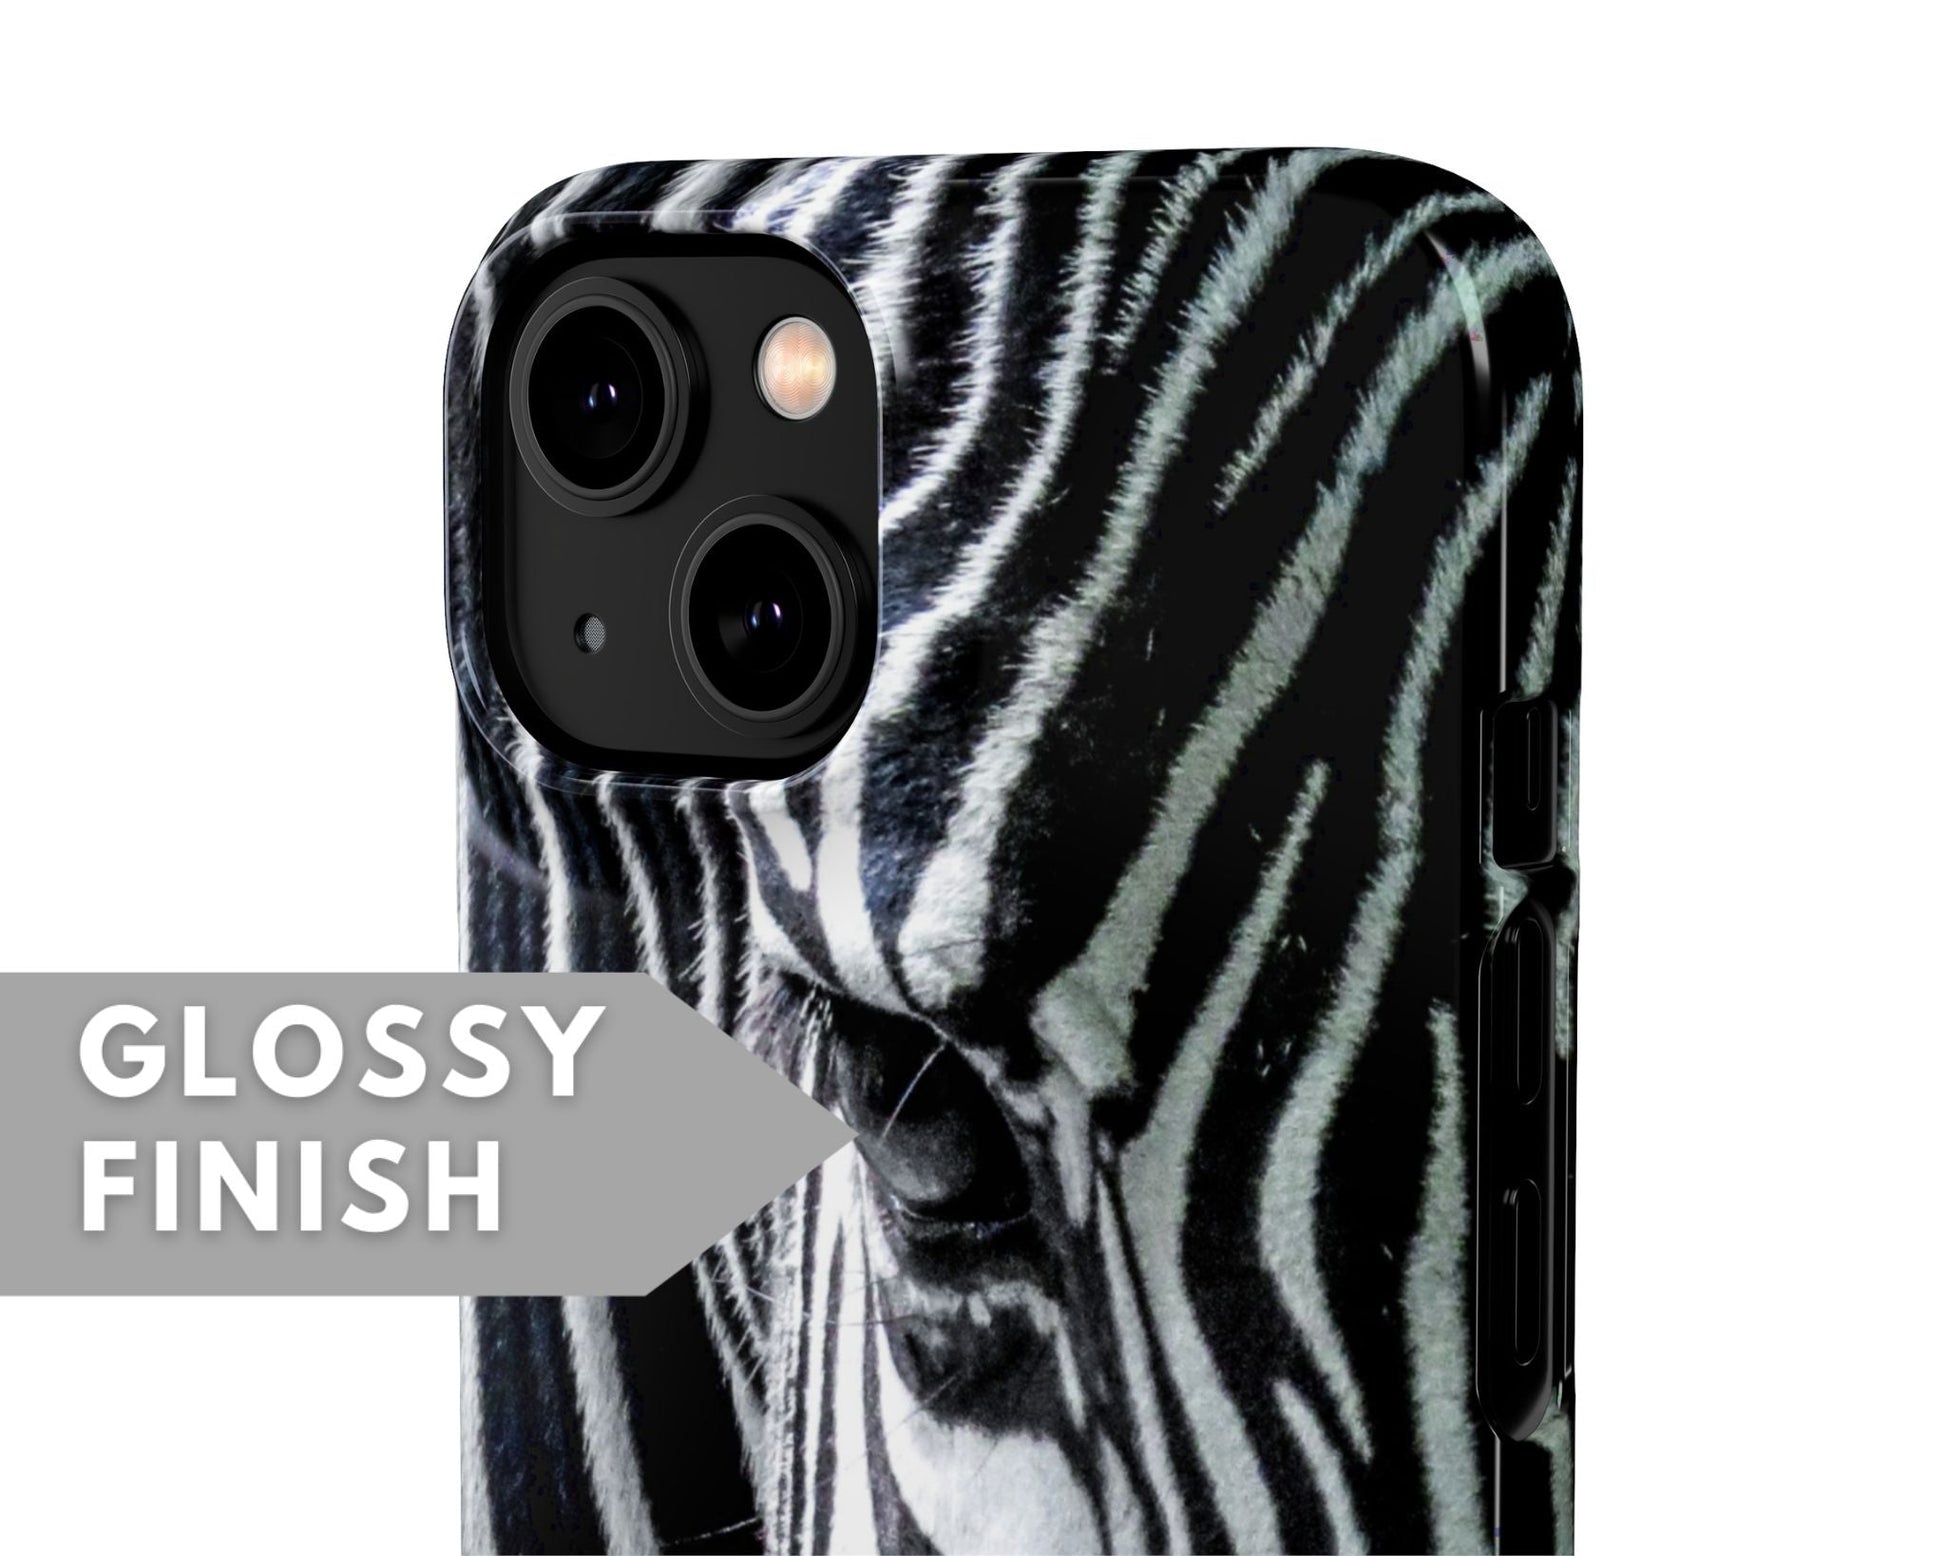 Zebra Head Snap Case - Classy Cases